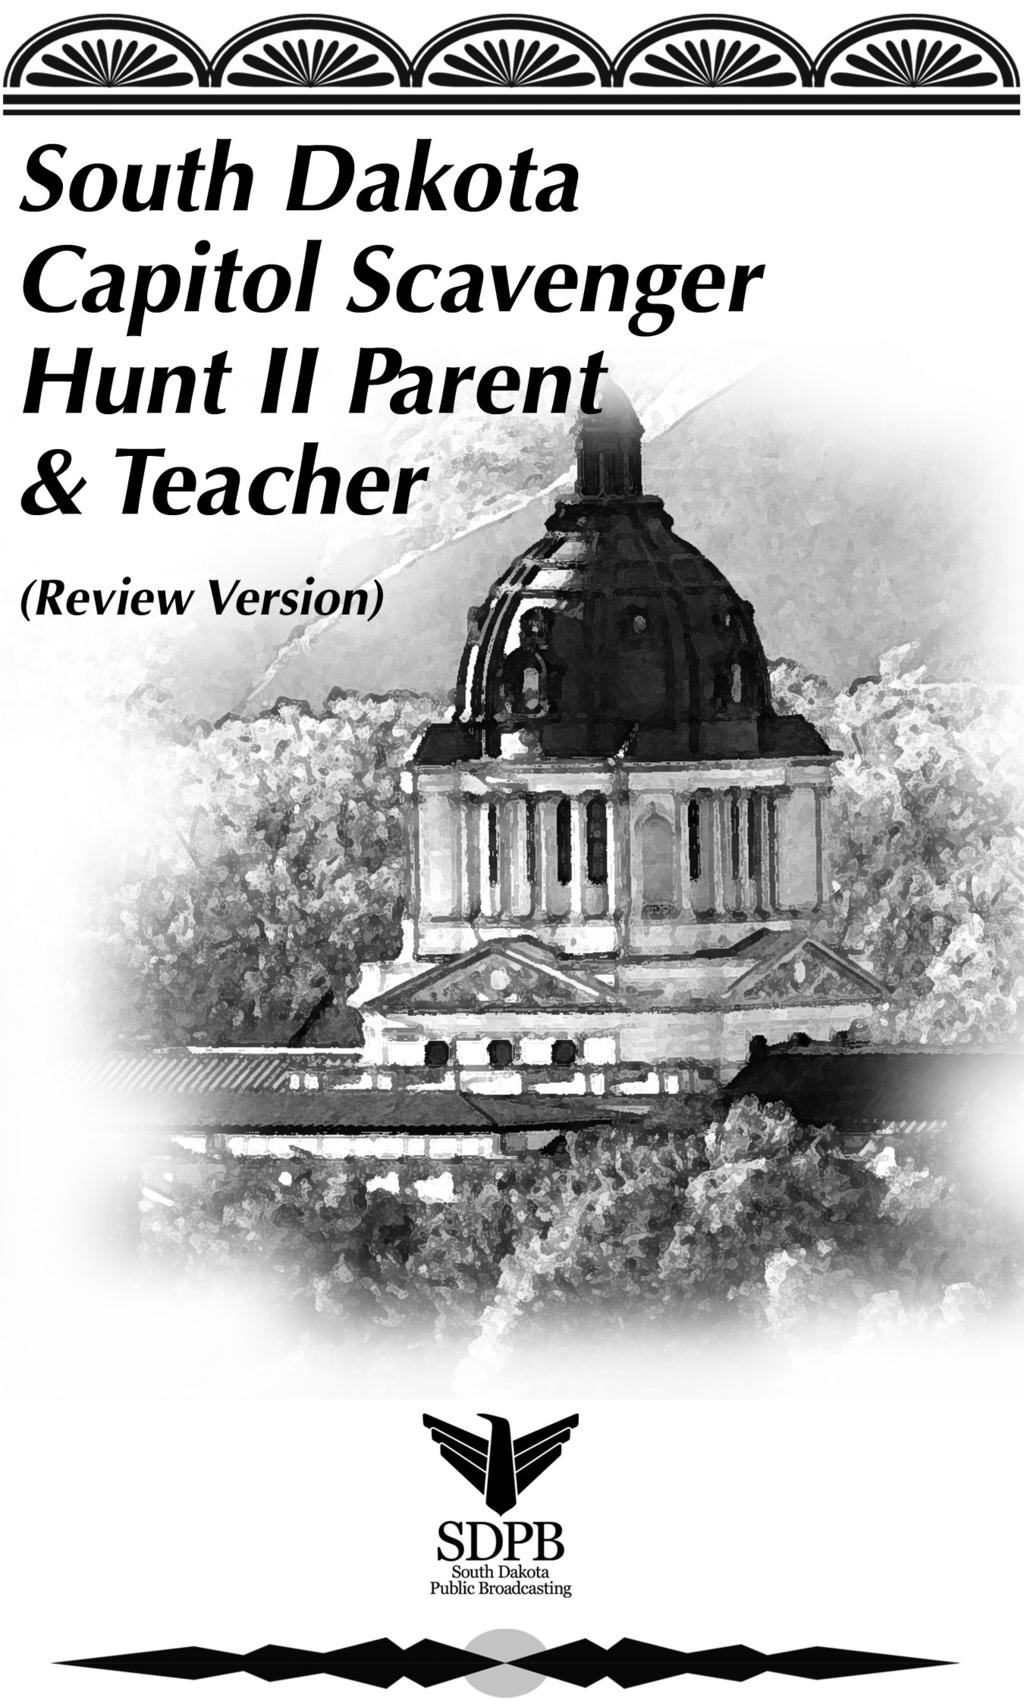 South Dakota State Capitol Scavenger Hunt II Parent & Teacher (Review Version) This scavenger hunt has been designed to provide children visiting the South Dakota State Capitol with an educational